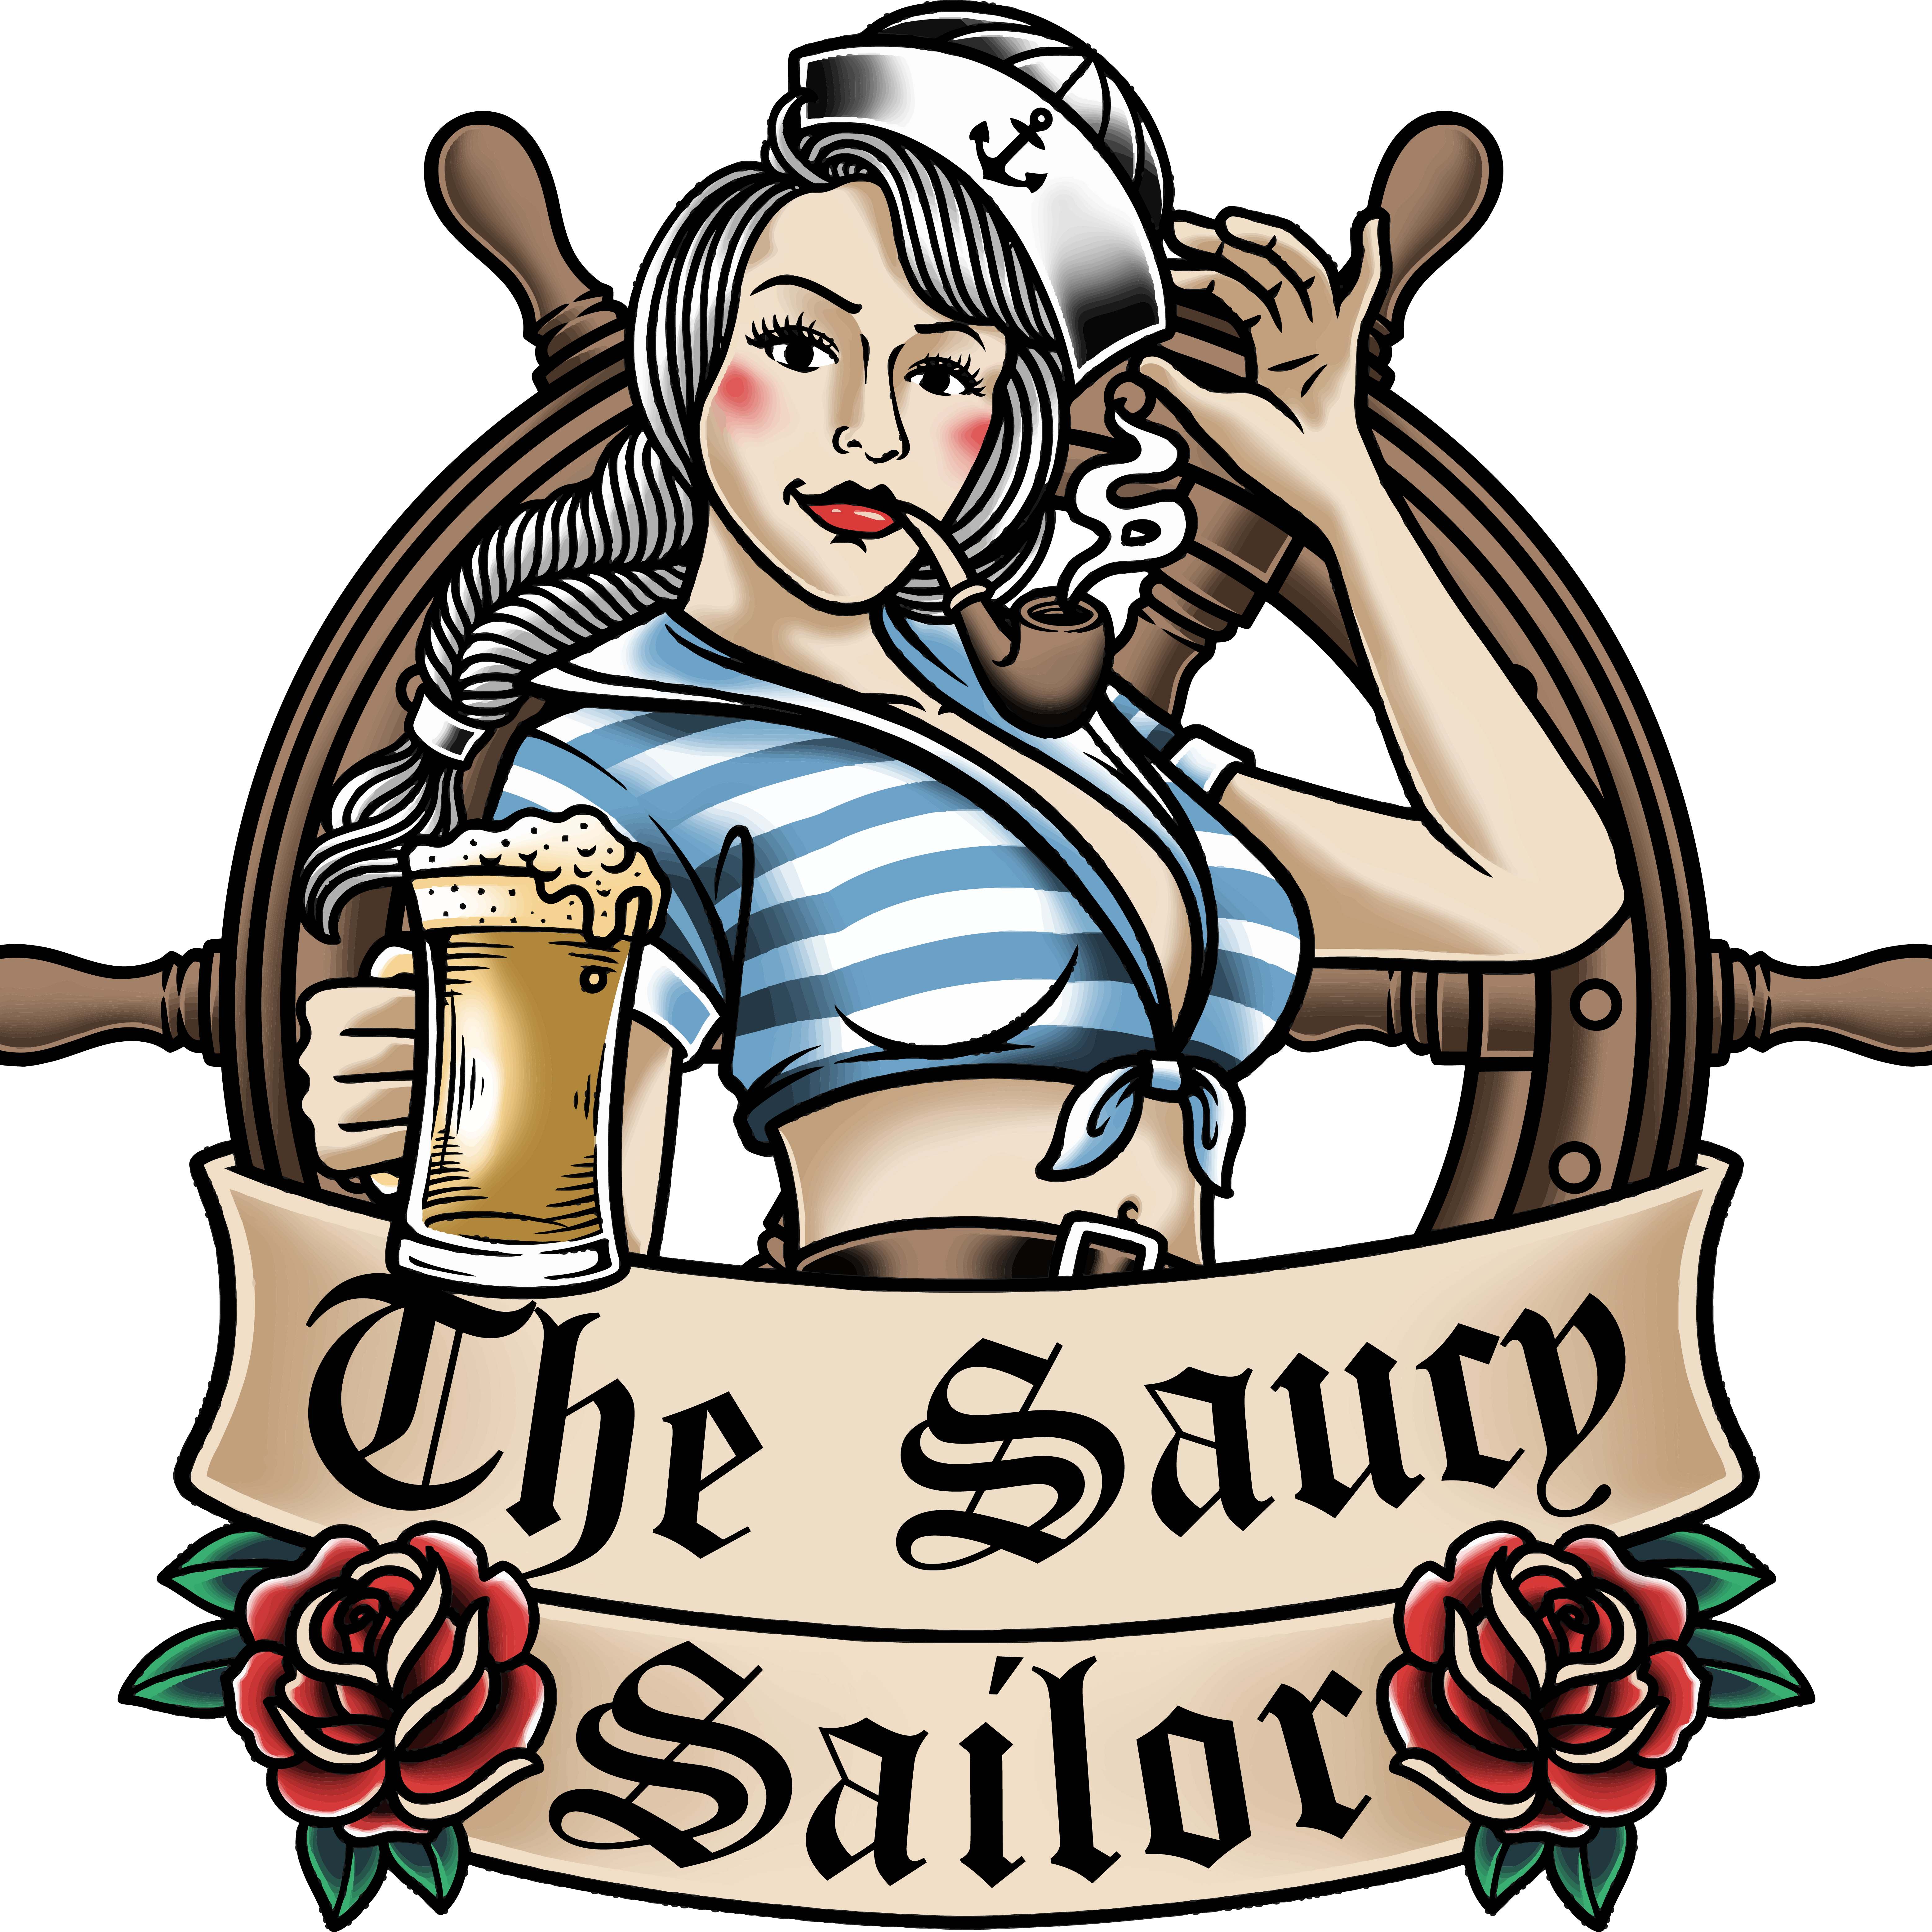 The Saucy Sailor